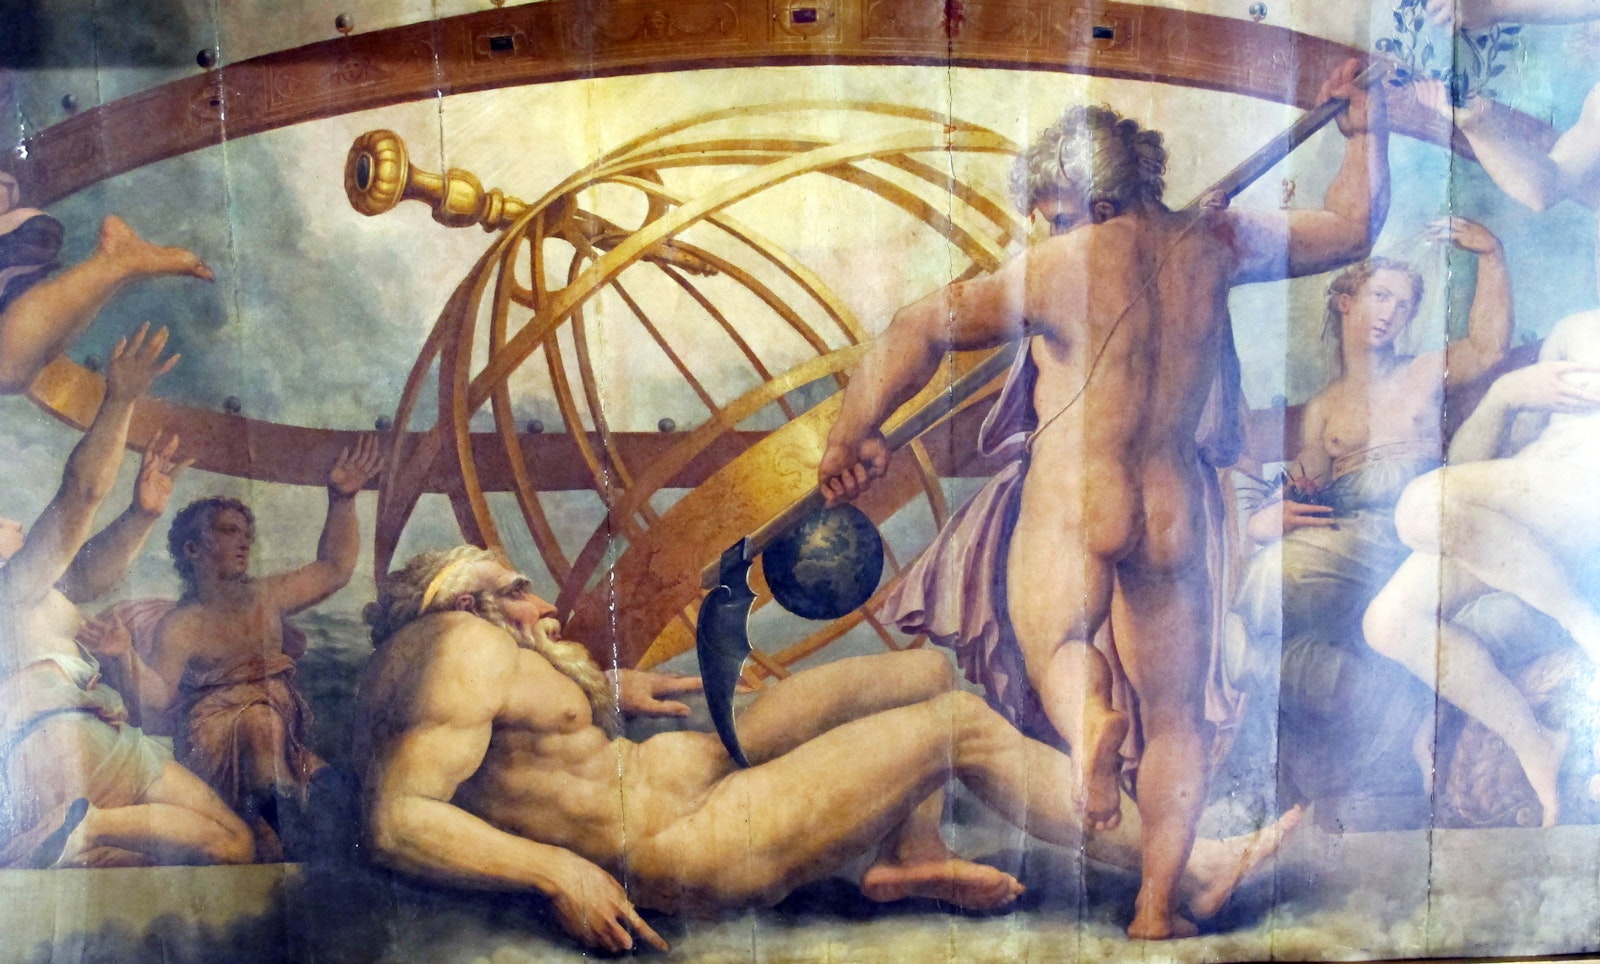 The Mutilation of Uranus by Saturn painting by Giorgio Vasari and Cristofano Gherardi circa 1550 Palazzo Vecchio